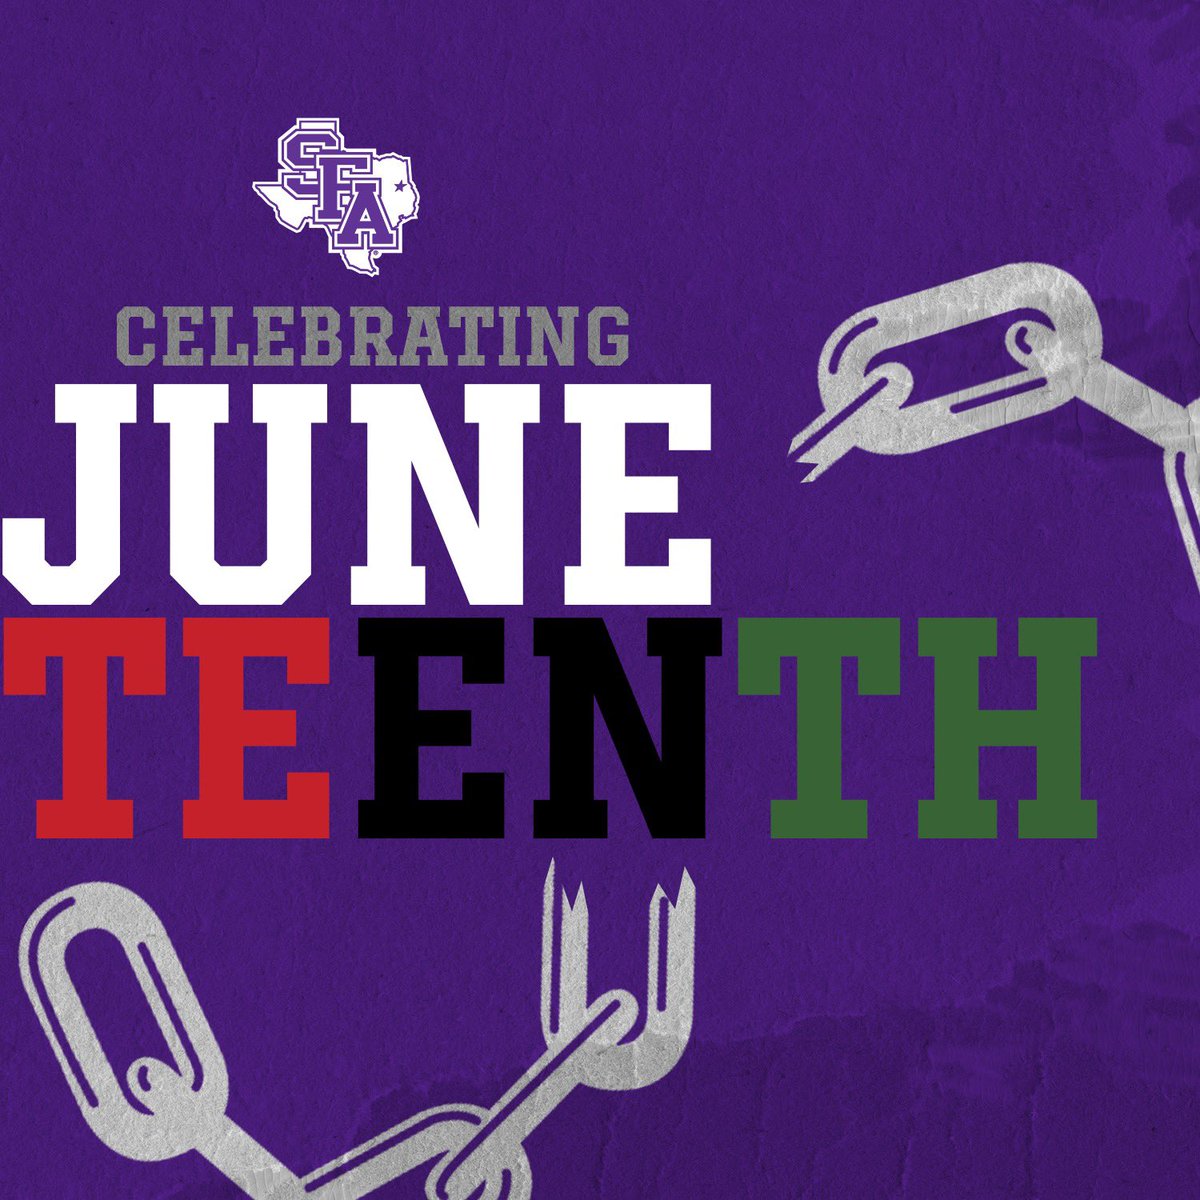 Celebrating freedom. 

Happy #Juneteenth!

#AxeEm x #RaiseTheAxe